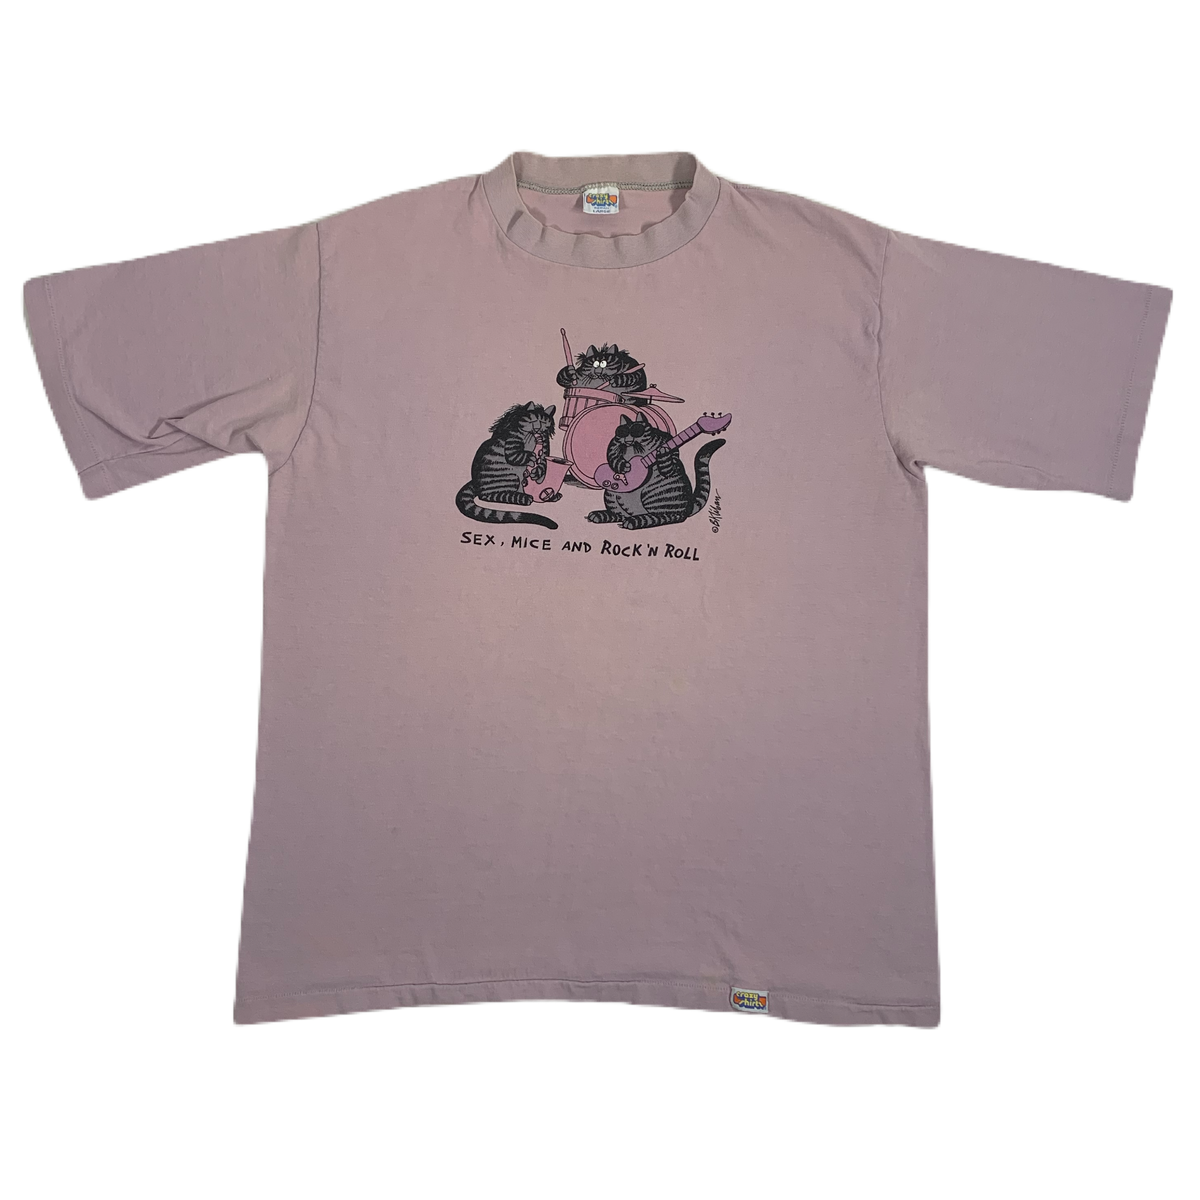 Vintage B. Kliban &quot;Sex, Mice, And Rock N Roll&quot; Crazy Shirts T-Shirt - jointcustodydc